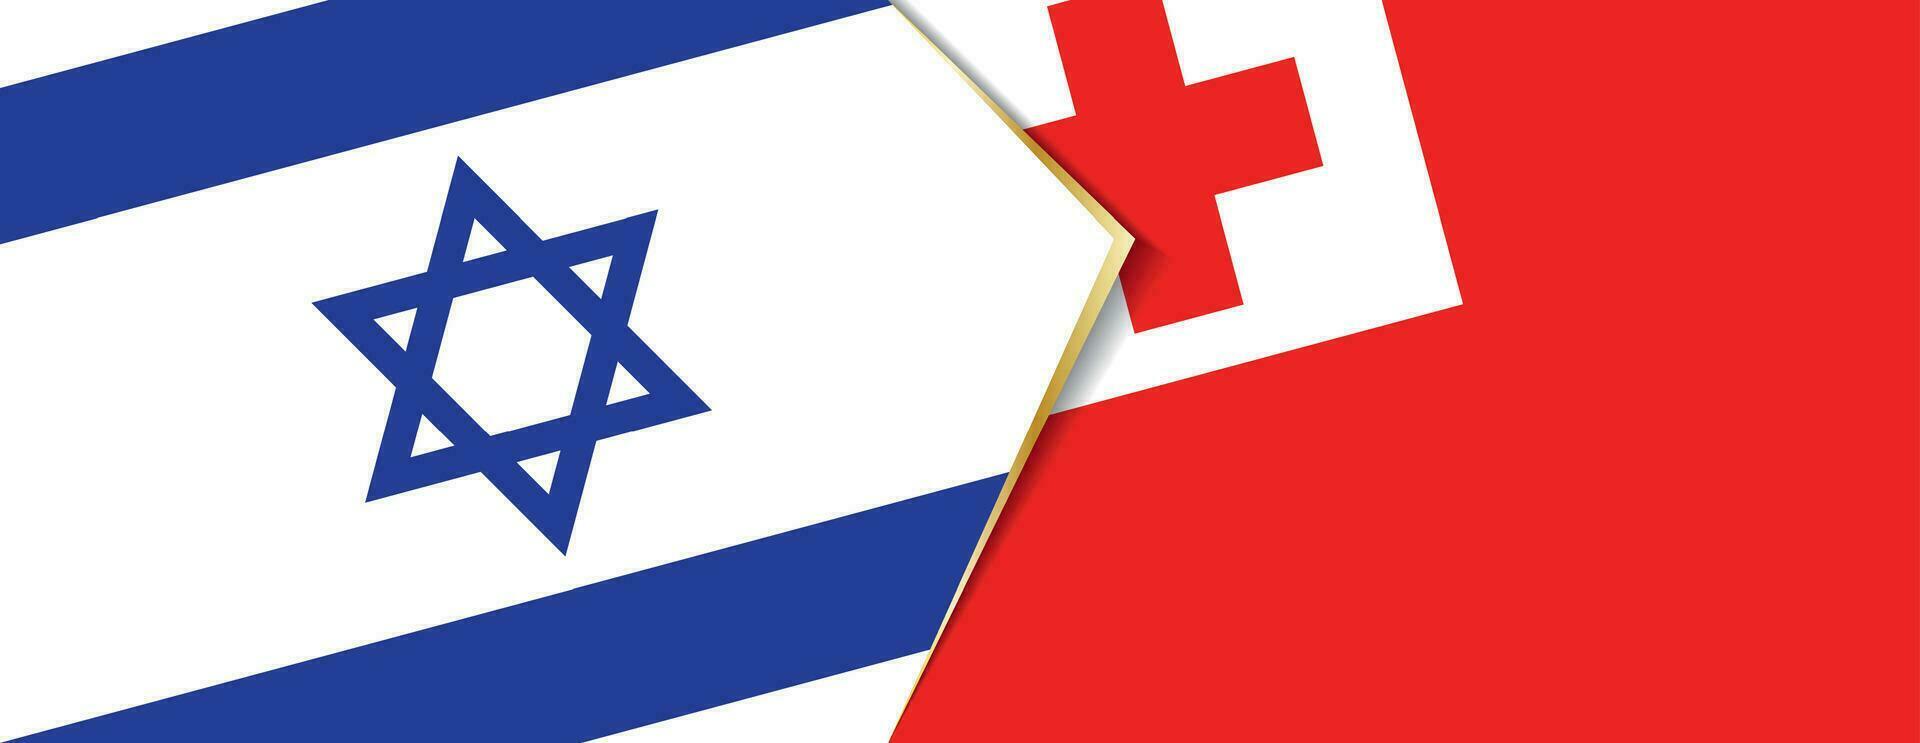 Israel und Tonga Flaggen, zwei Vektor Flaggen.